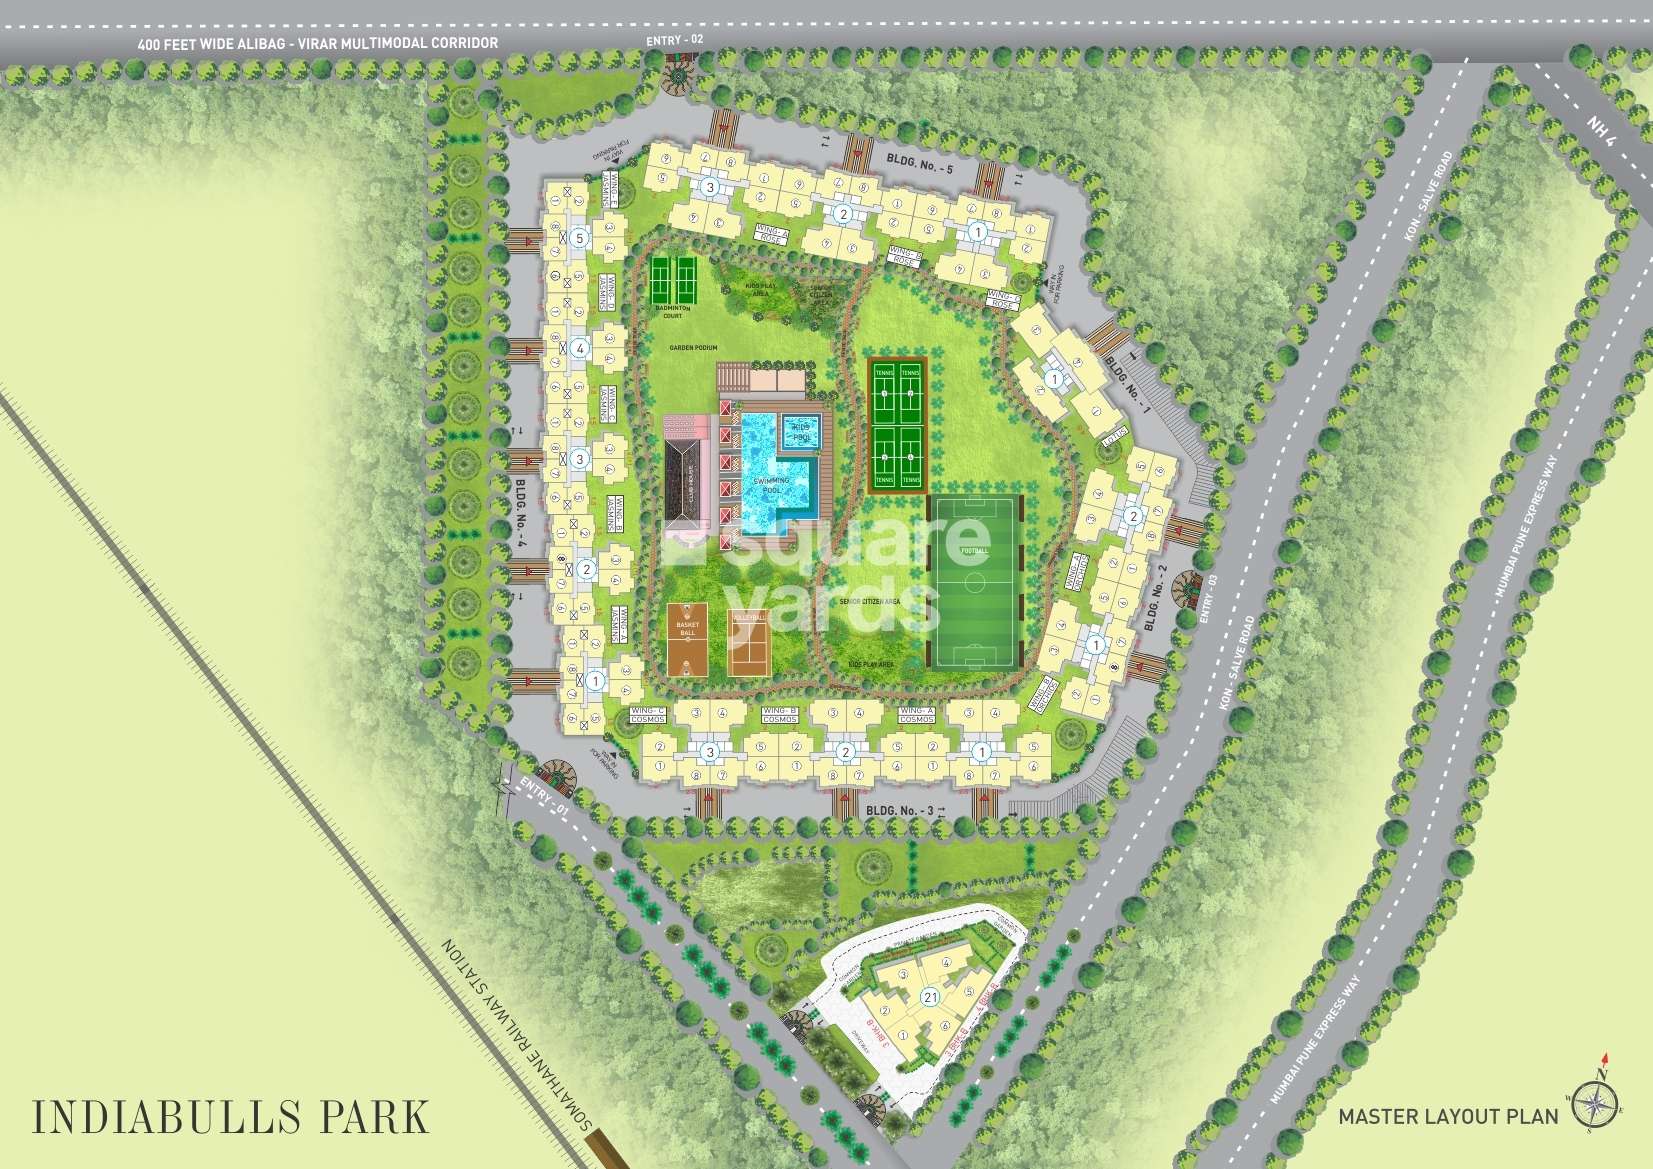 indiabulls park master plan image1